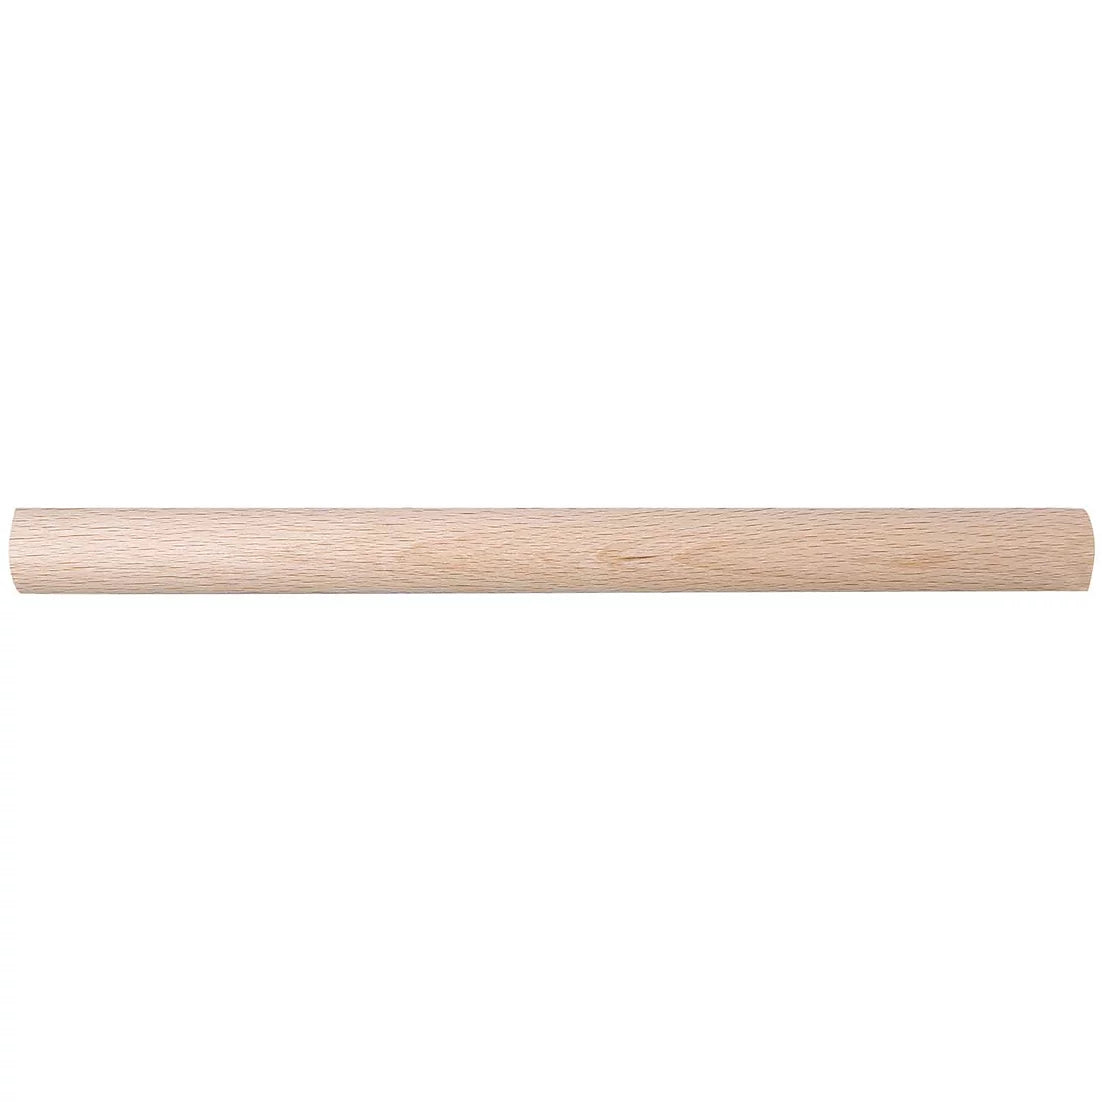 Macramé Wooden Dowel Rod Pack of 4